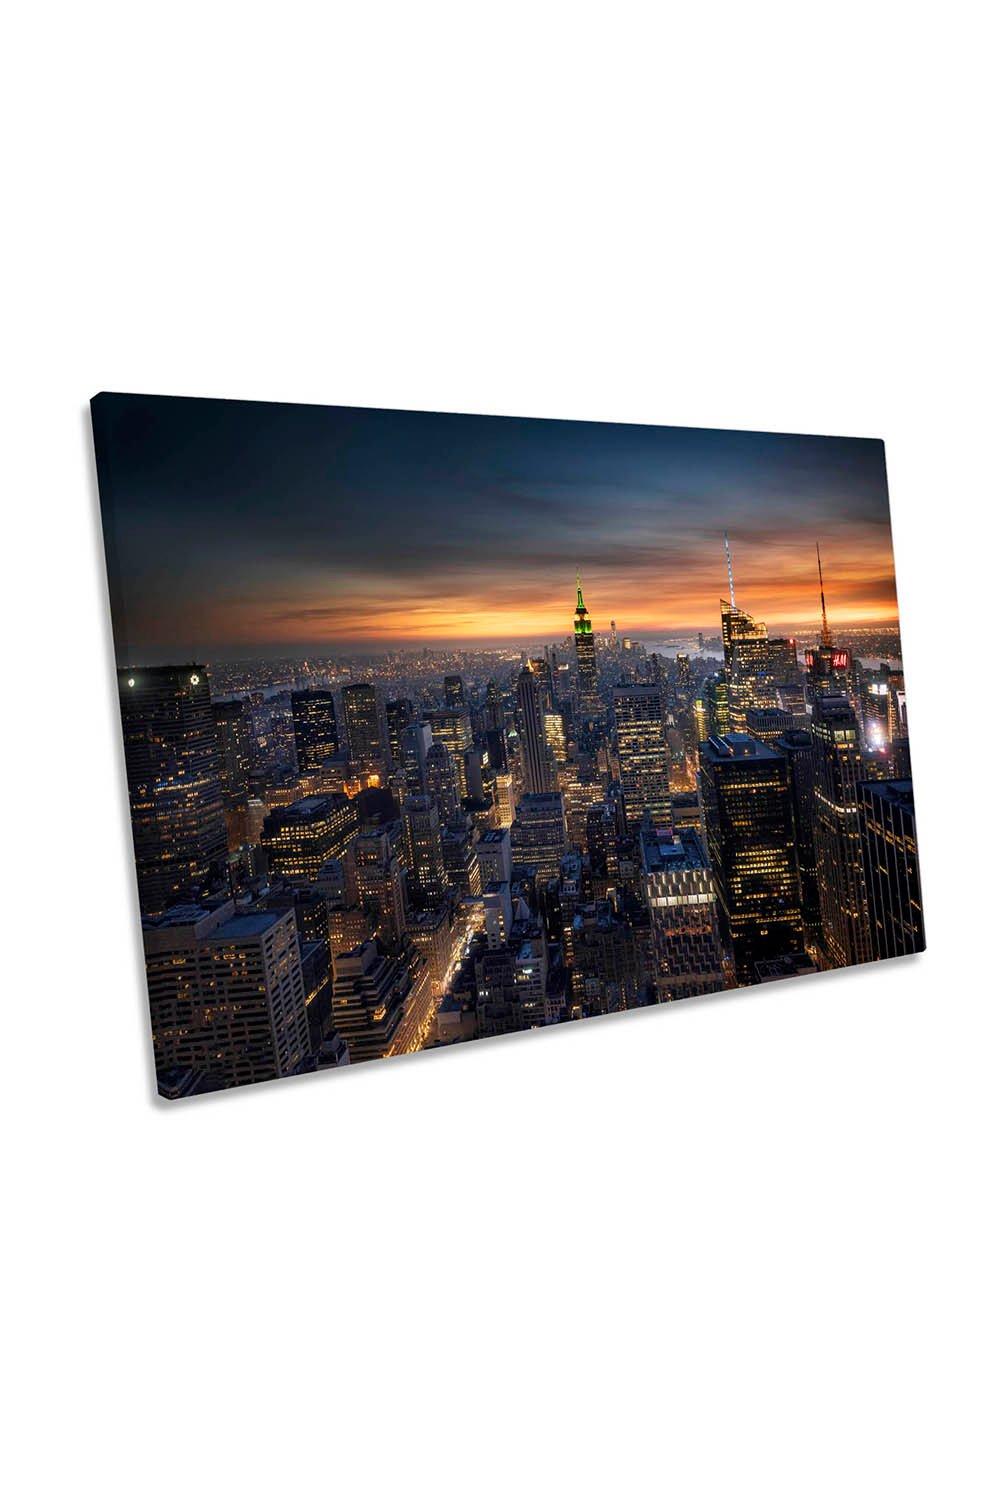 Night Falls on New York City Orange Sunset Skyline Canvas Wall Art Picture Print